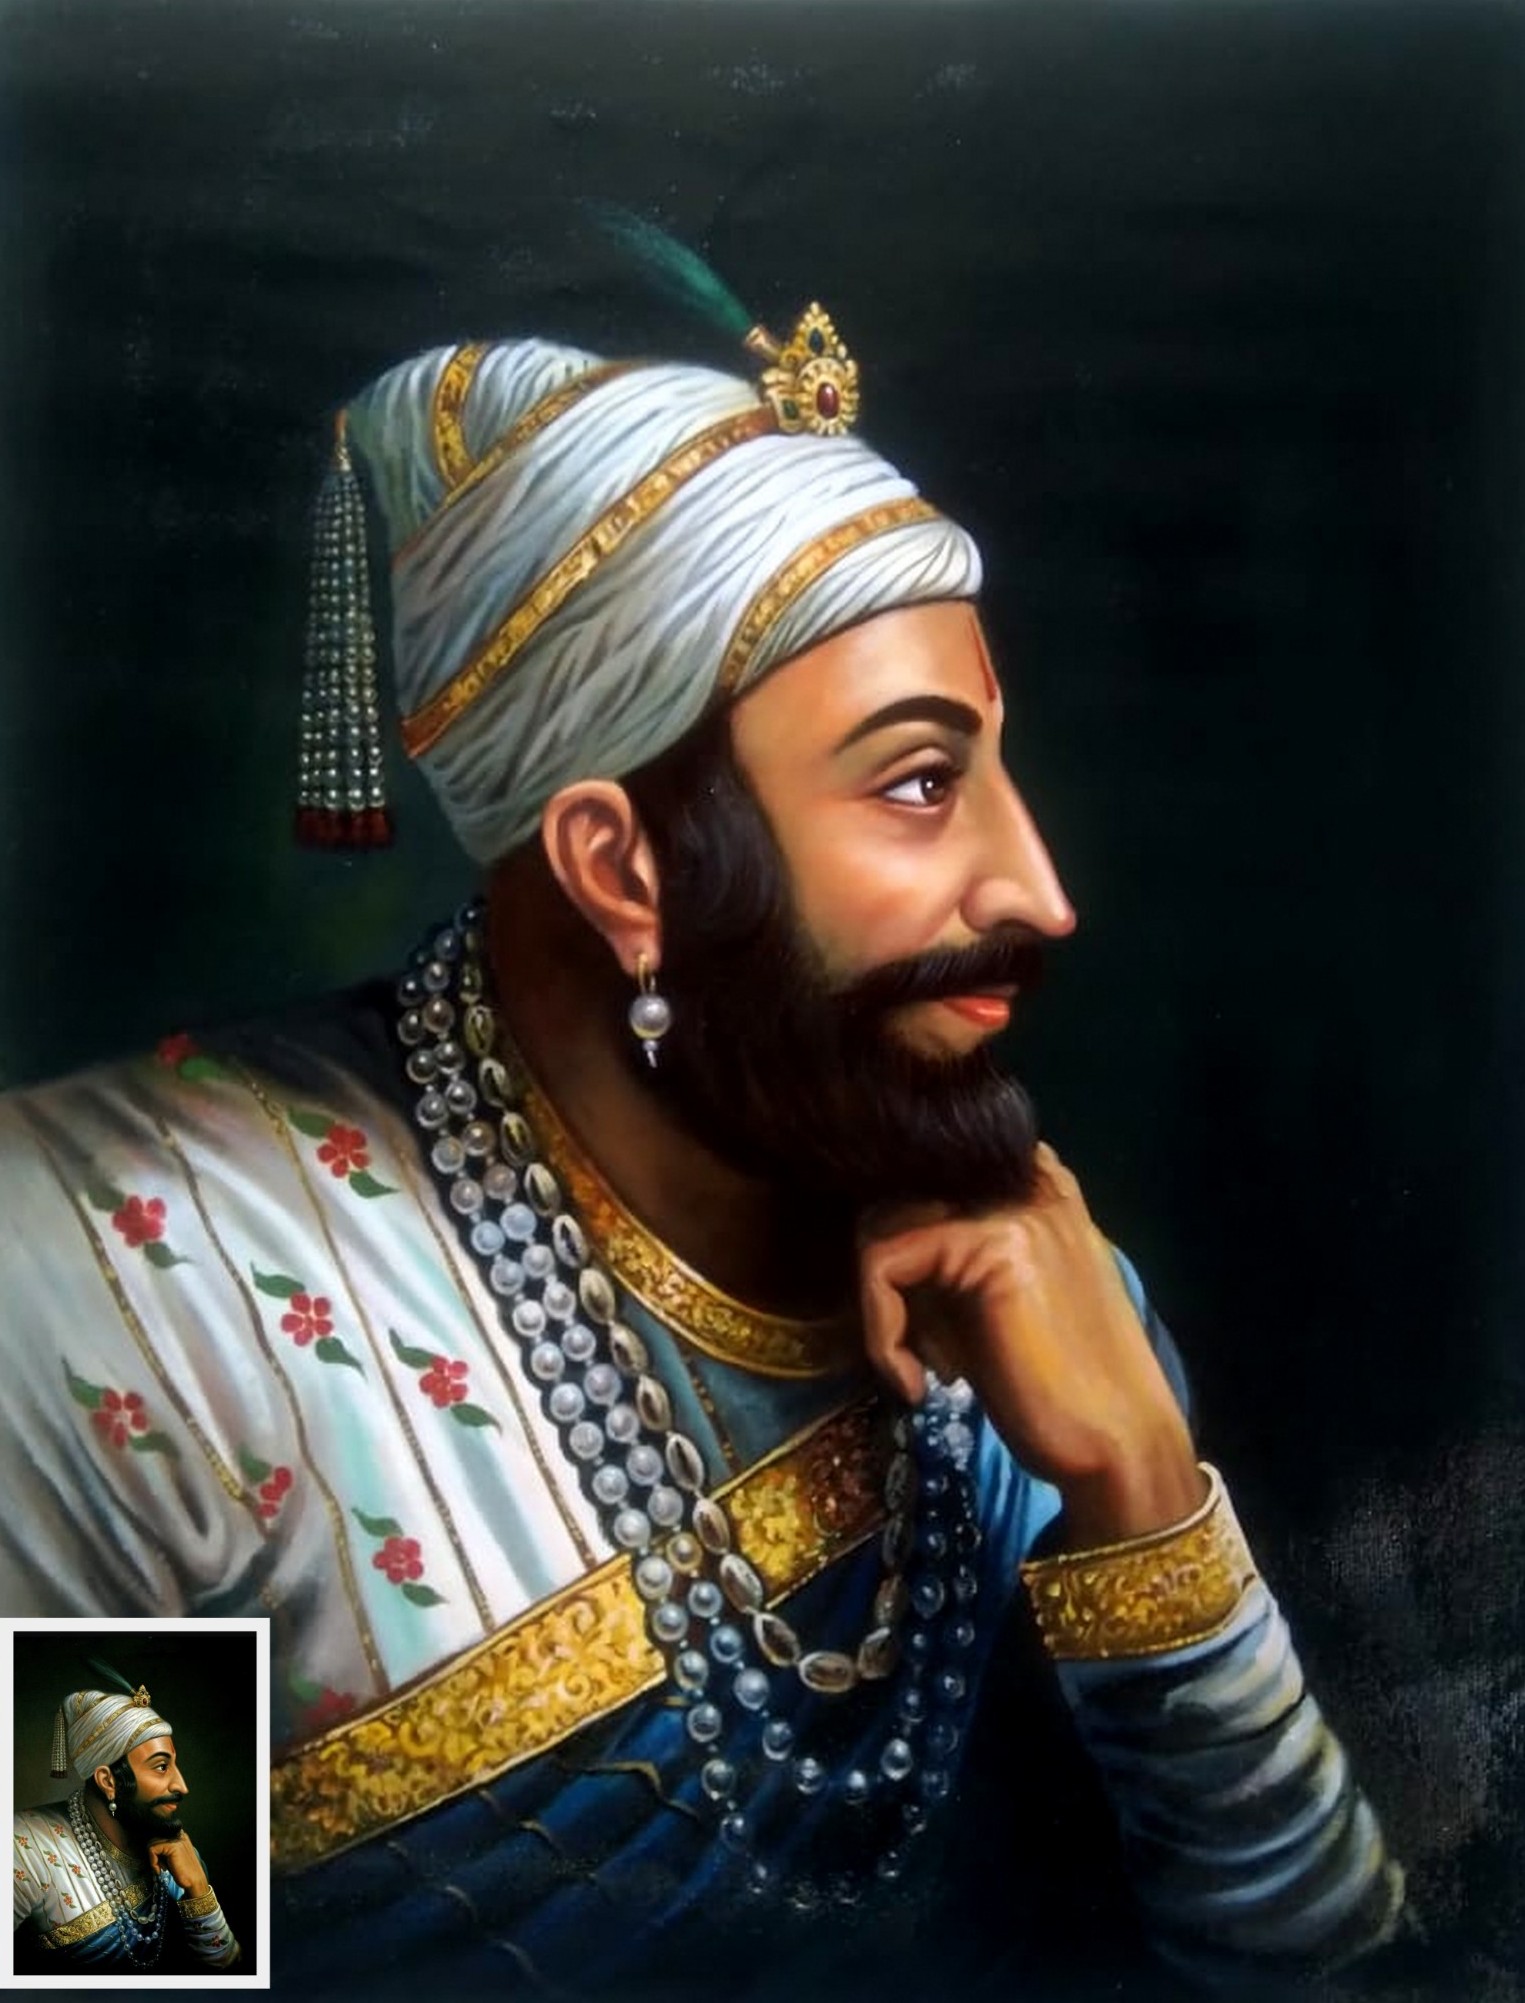 shivaji Maharaj portrait painting, old master reproduction painting, replica painting